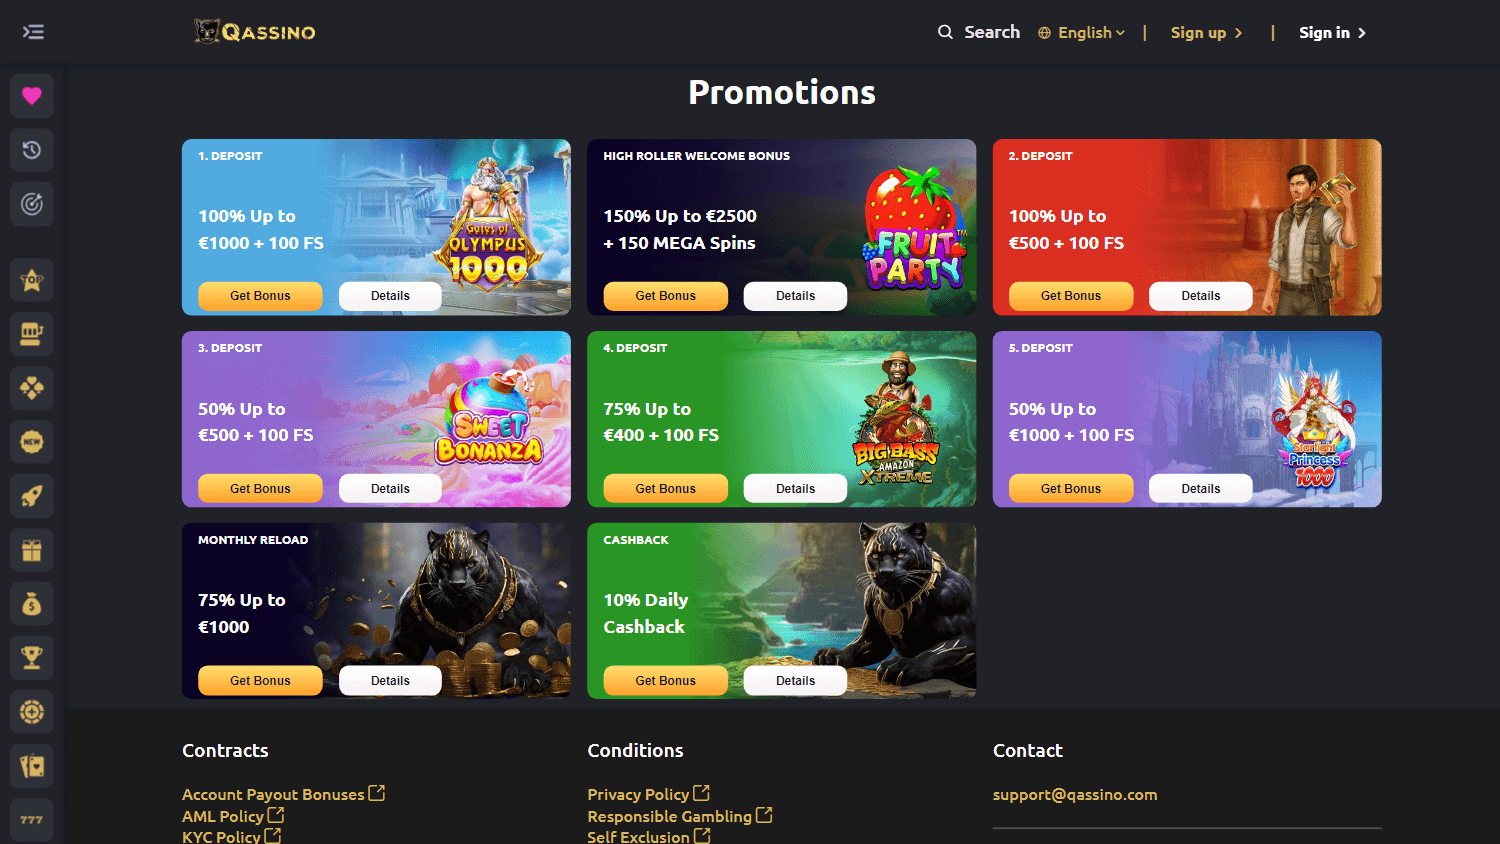 qassino_casino_promotions_desktop